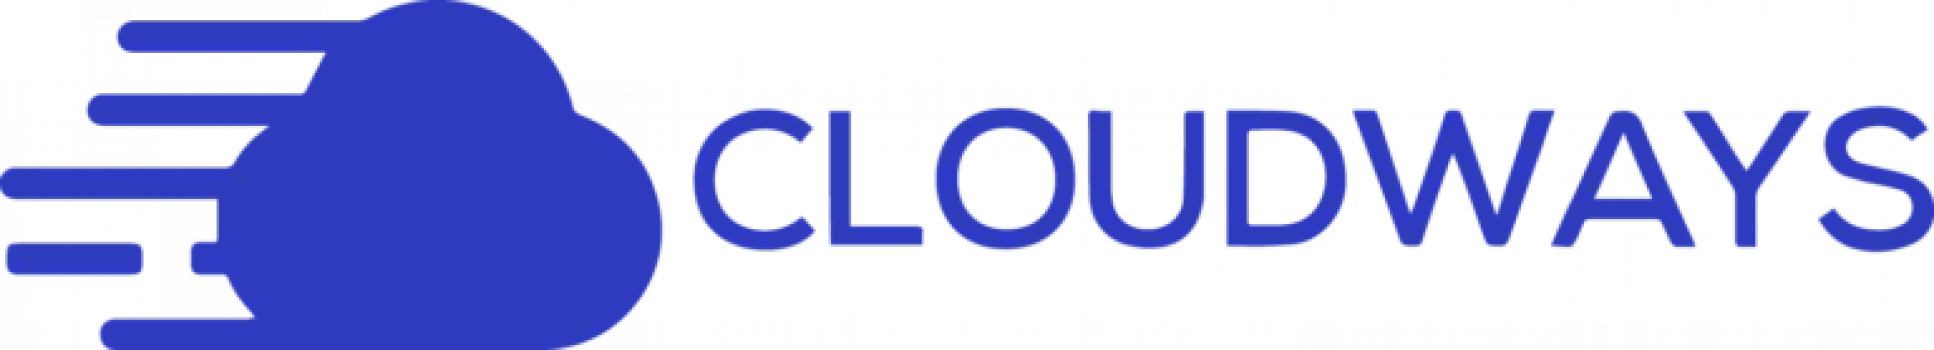 Cloudways Logo - cloudways Offers - cloudways coupons - cloudways deals - cloudways discounts - cloudways whypayfull